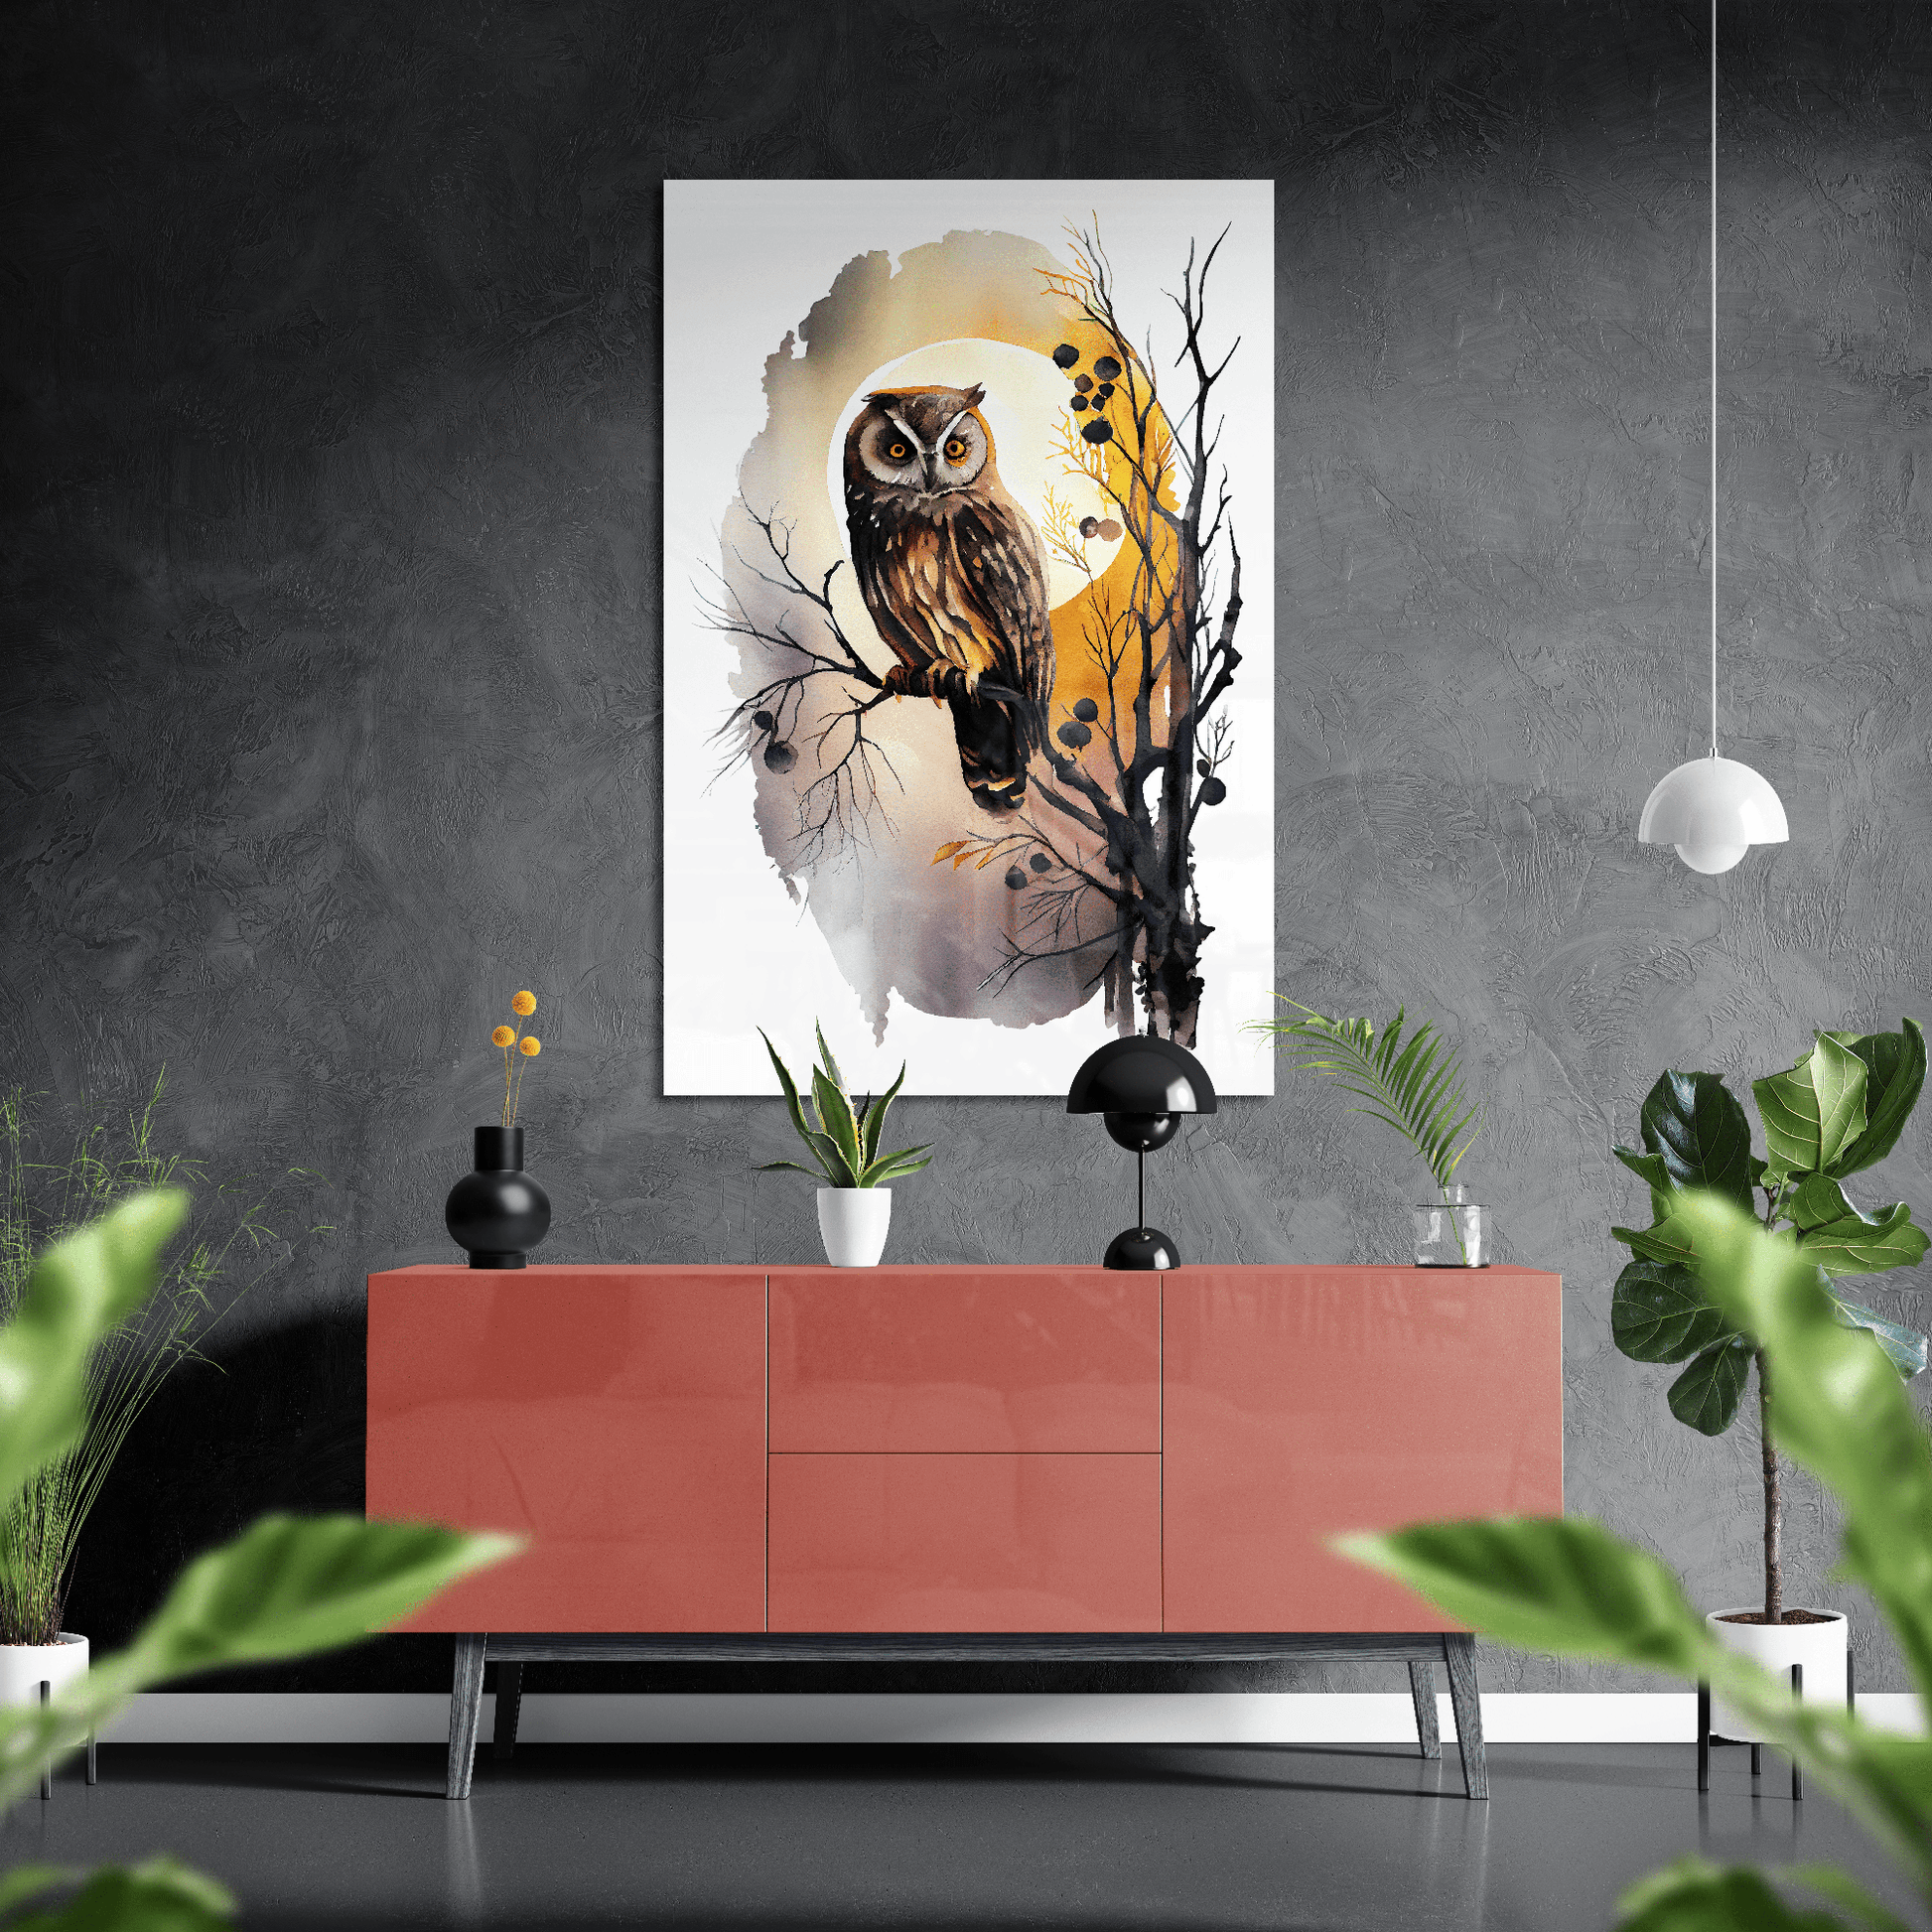 Moonlight Owl - Aquarell Wandbild - Hochformat - über einer Wohnzimmer-Kommode